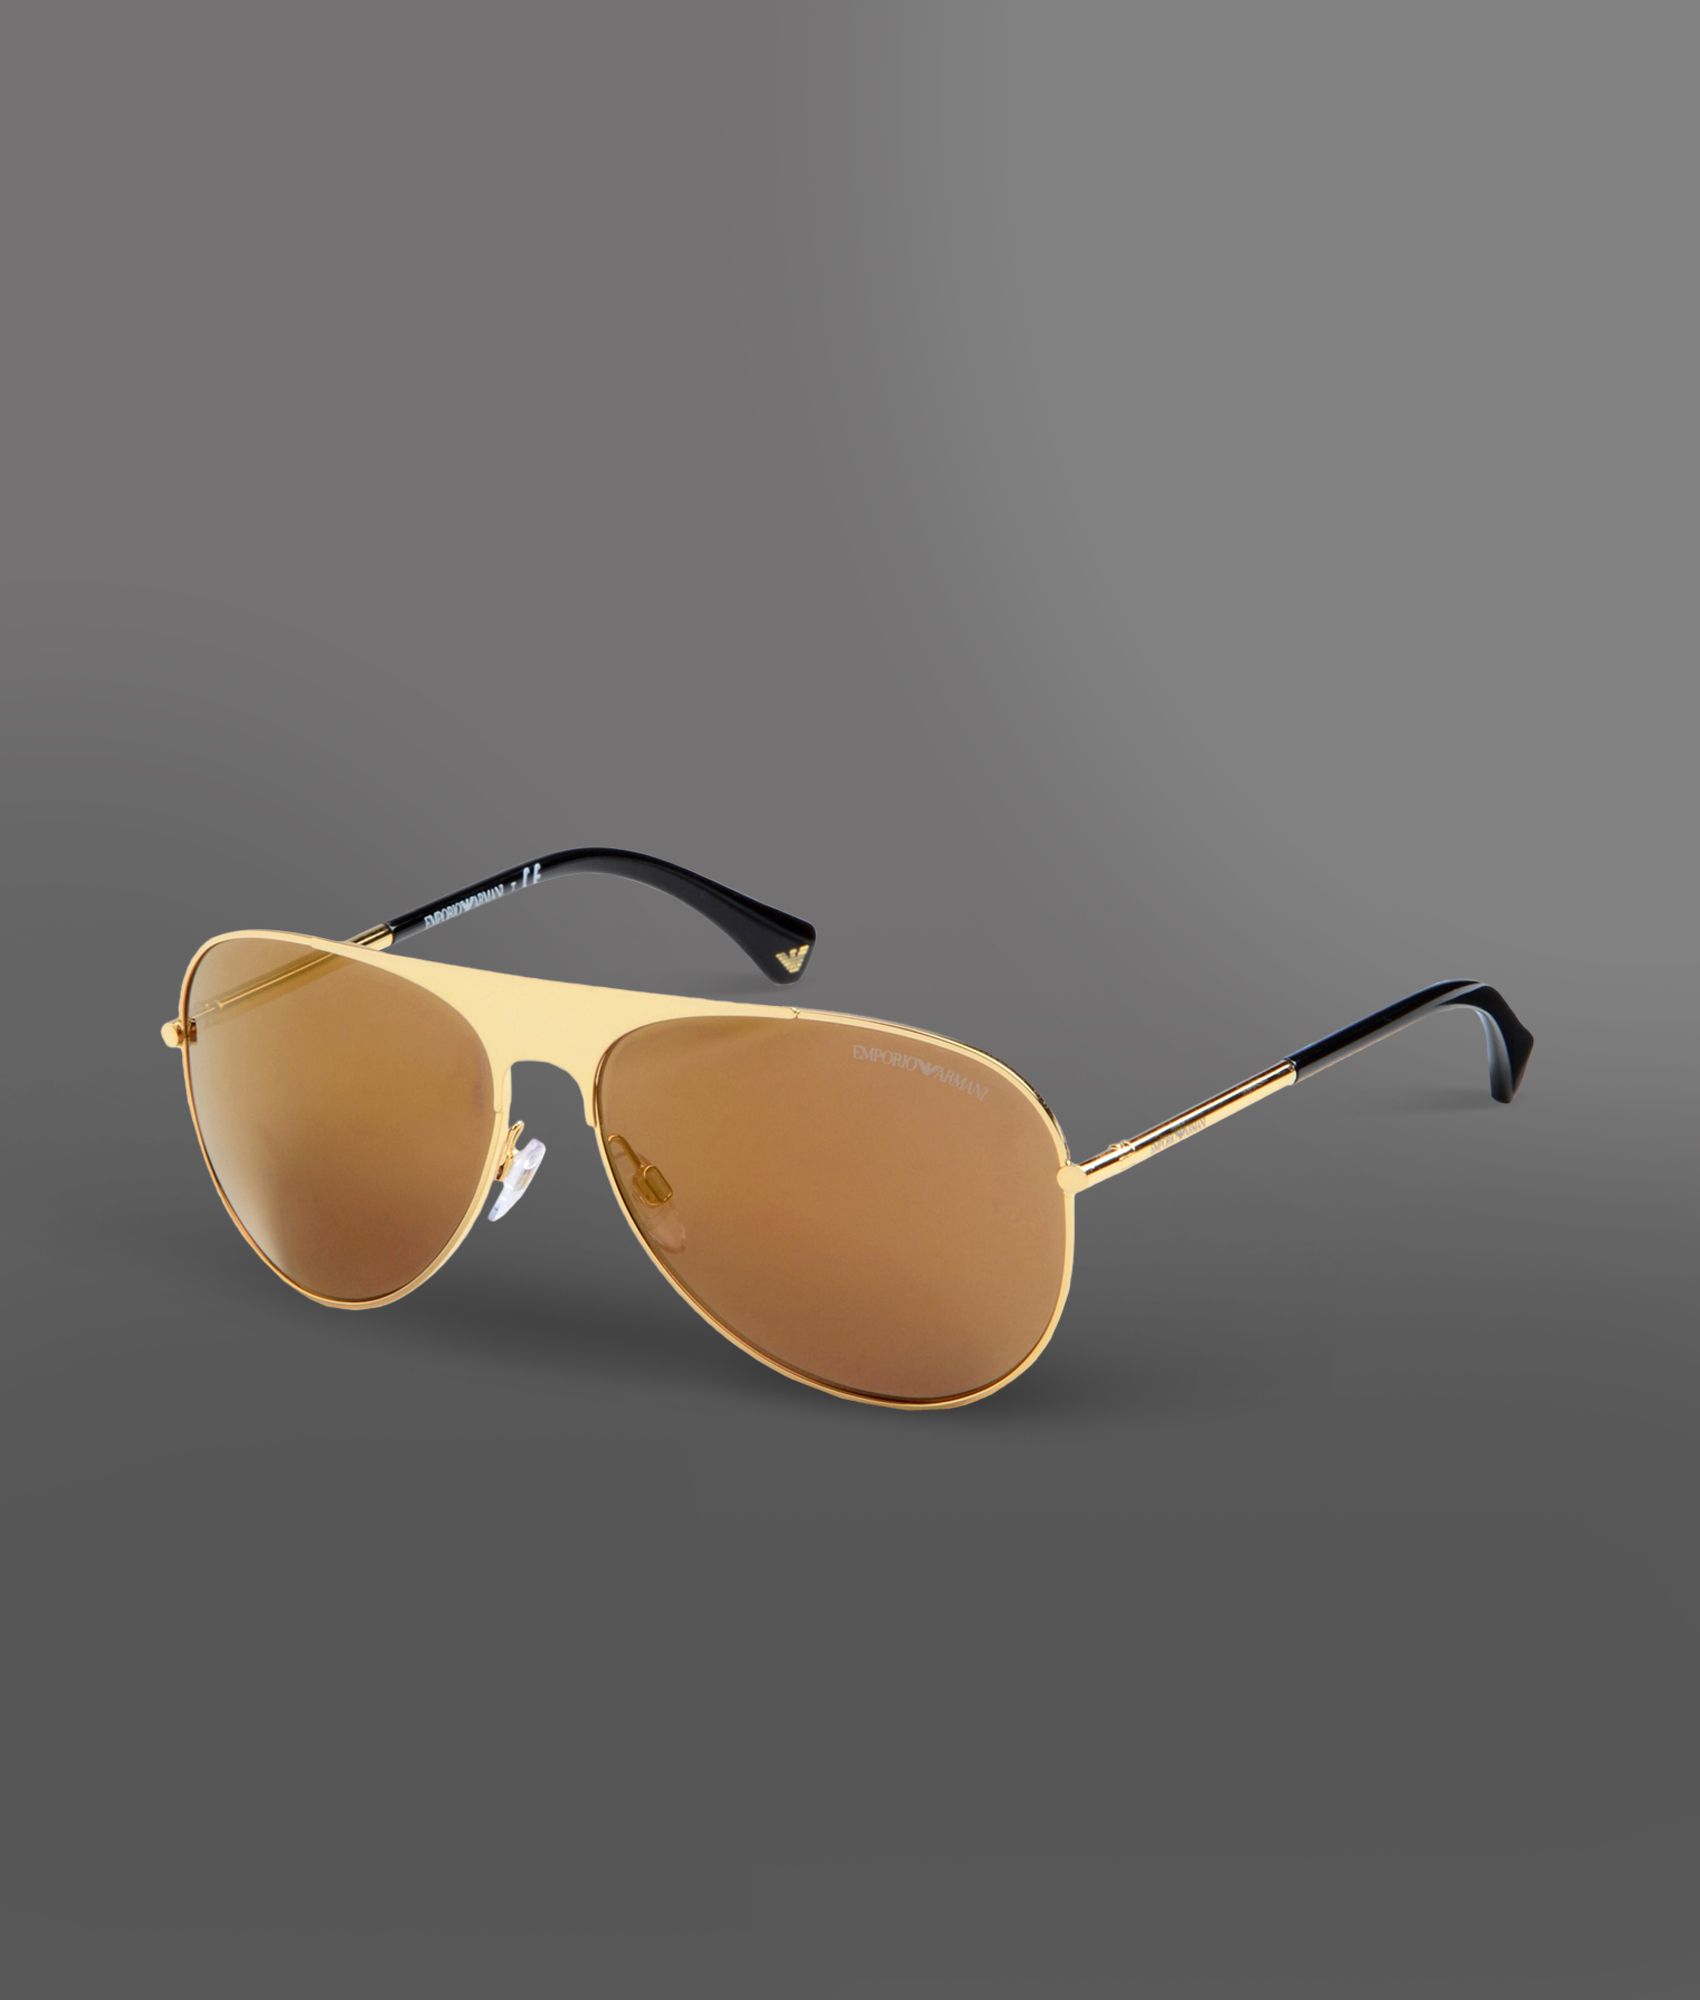 Armani Sunglasses Gold Shop, SAVE 53%.